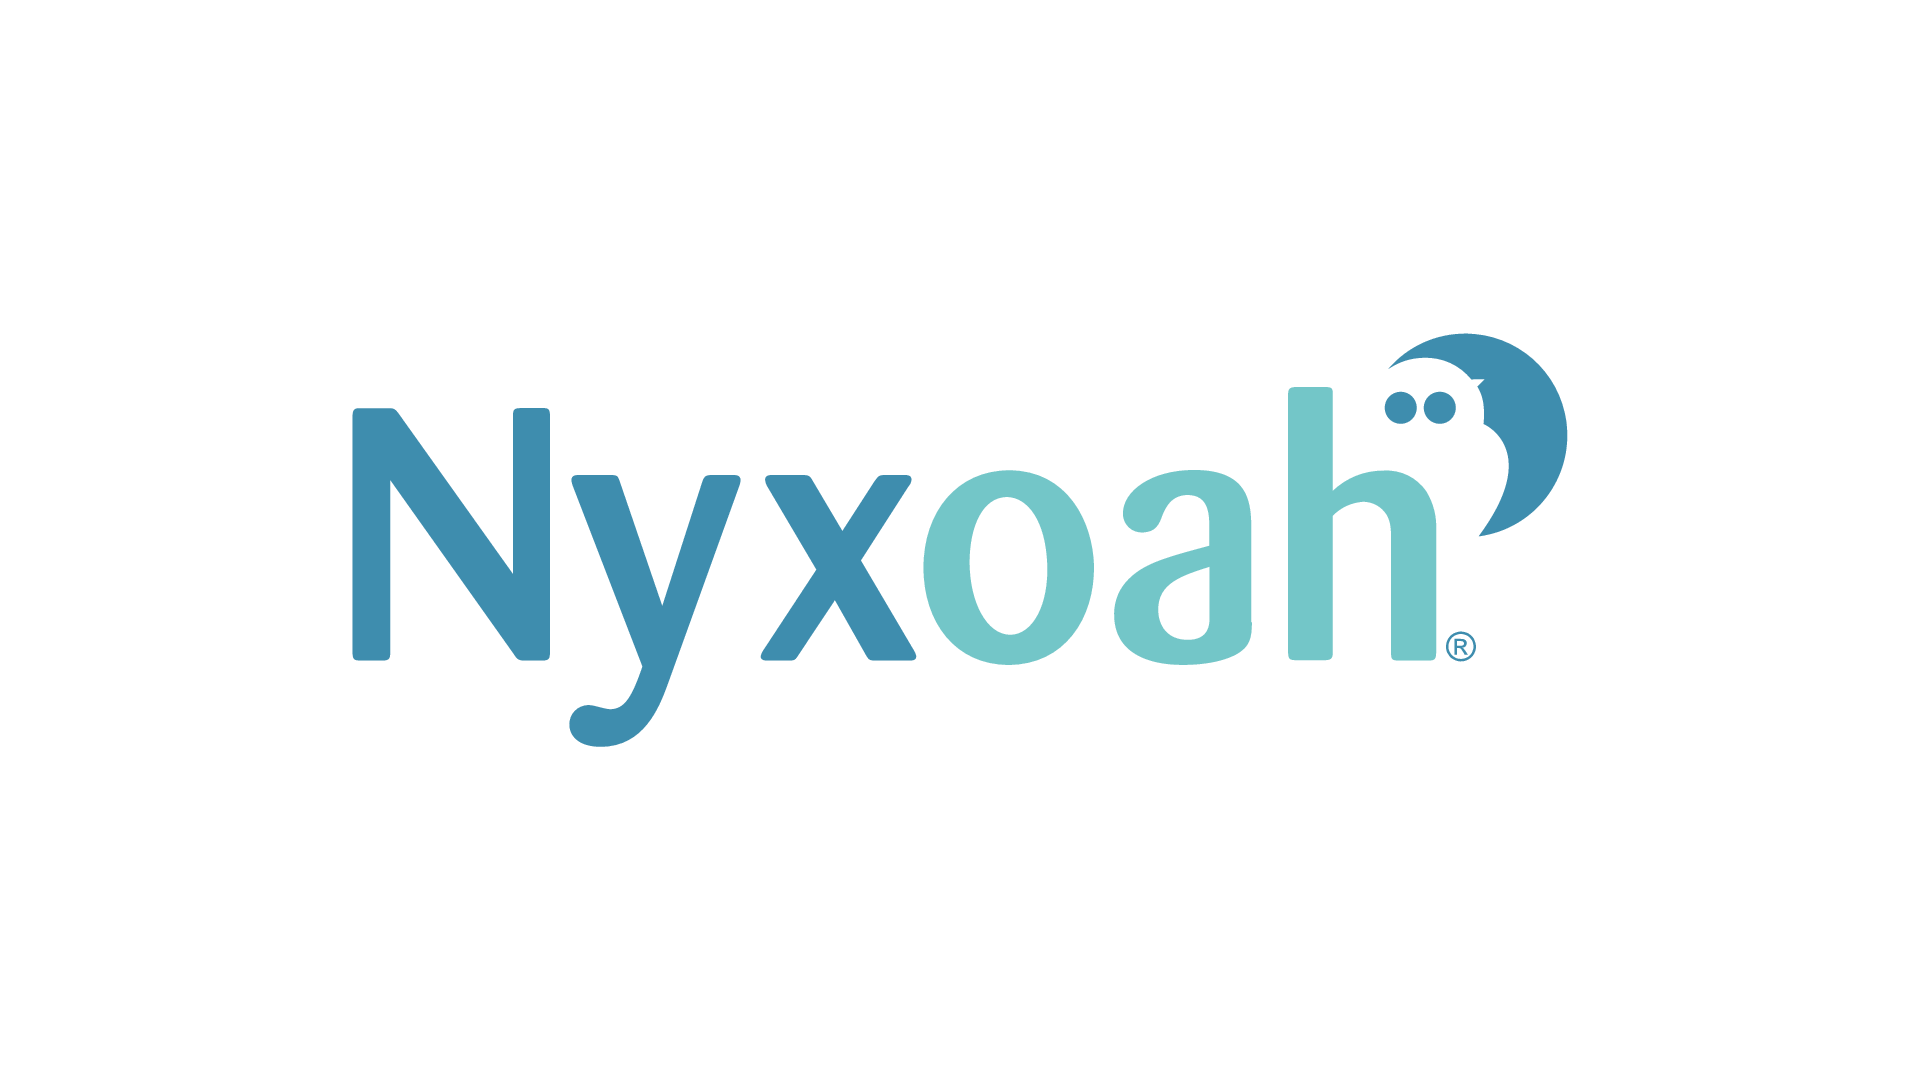 Cure partner and resident logo Nyxoah 